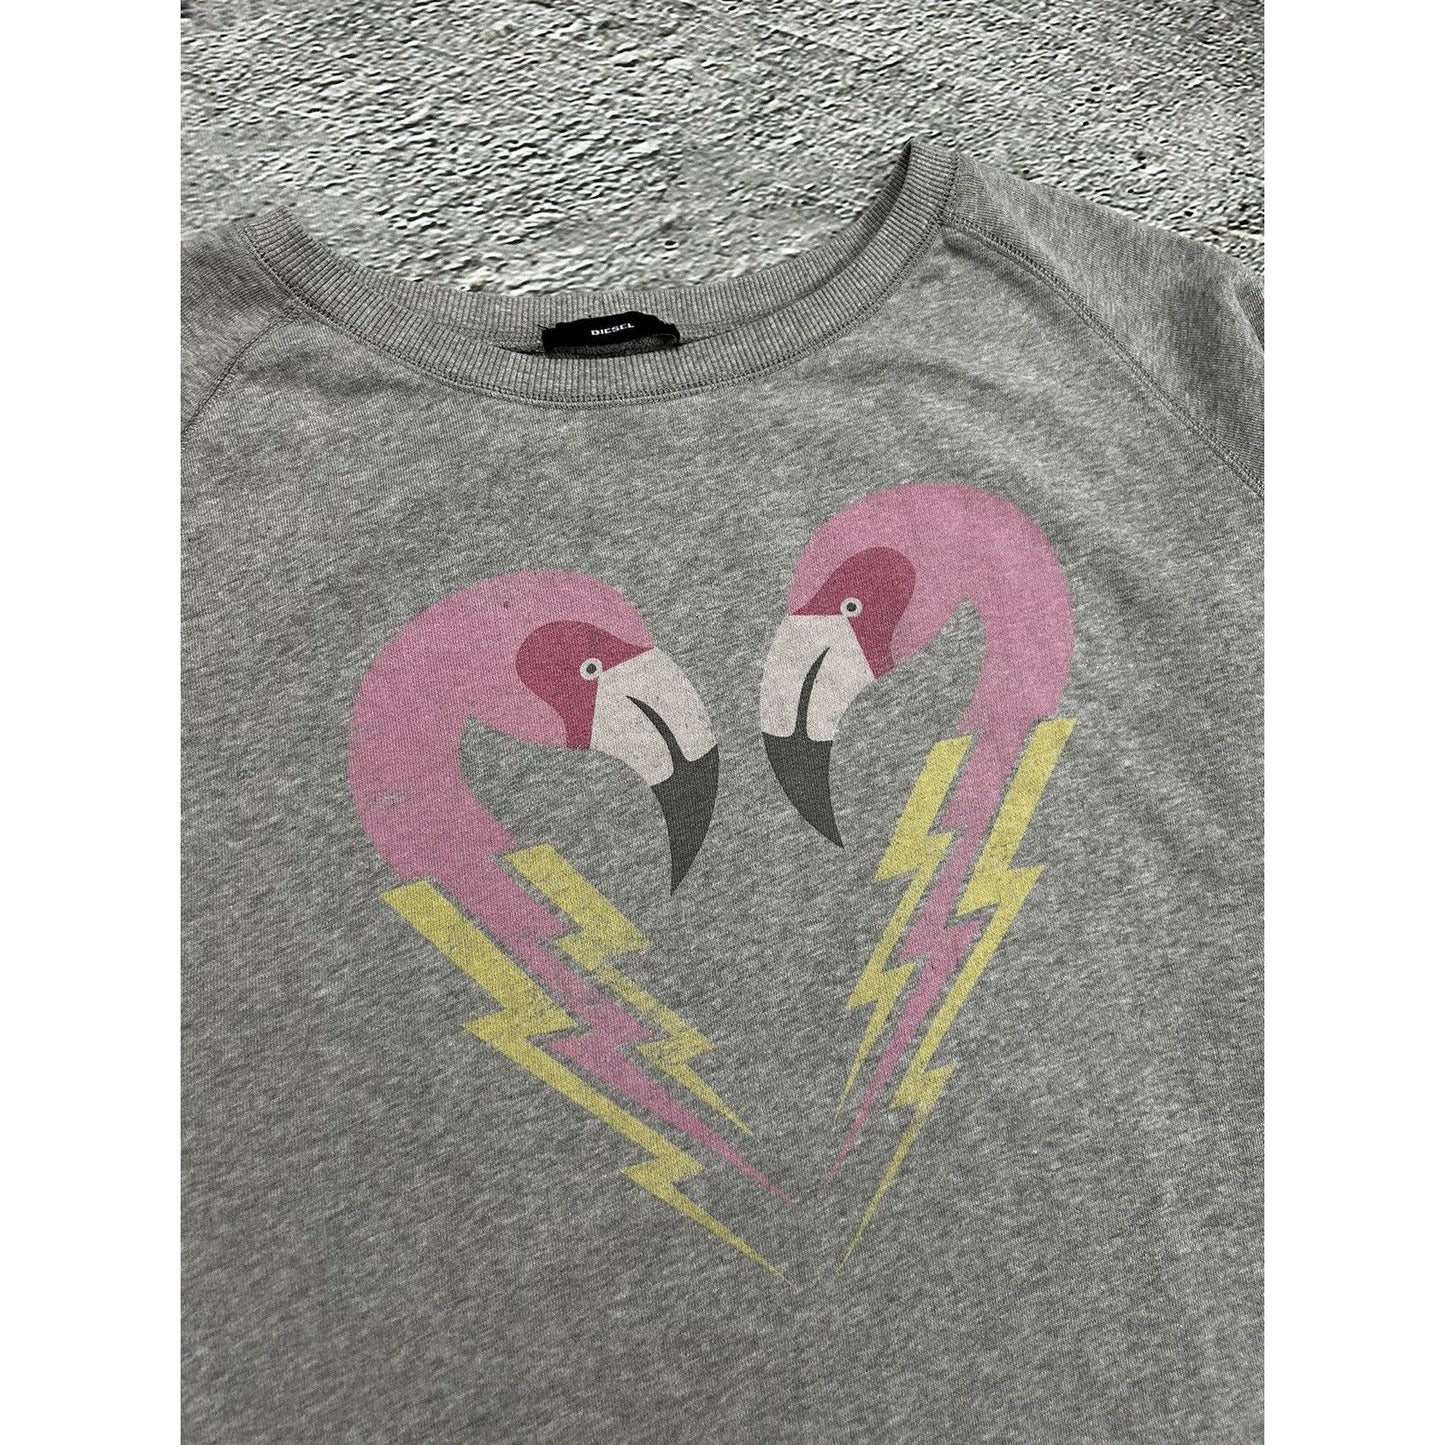 Diesel F Sven boxy sweatshirt flamingo heart grey